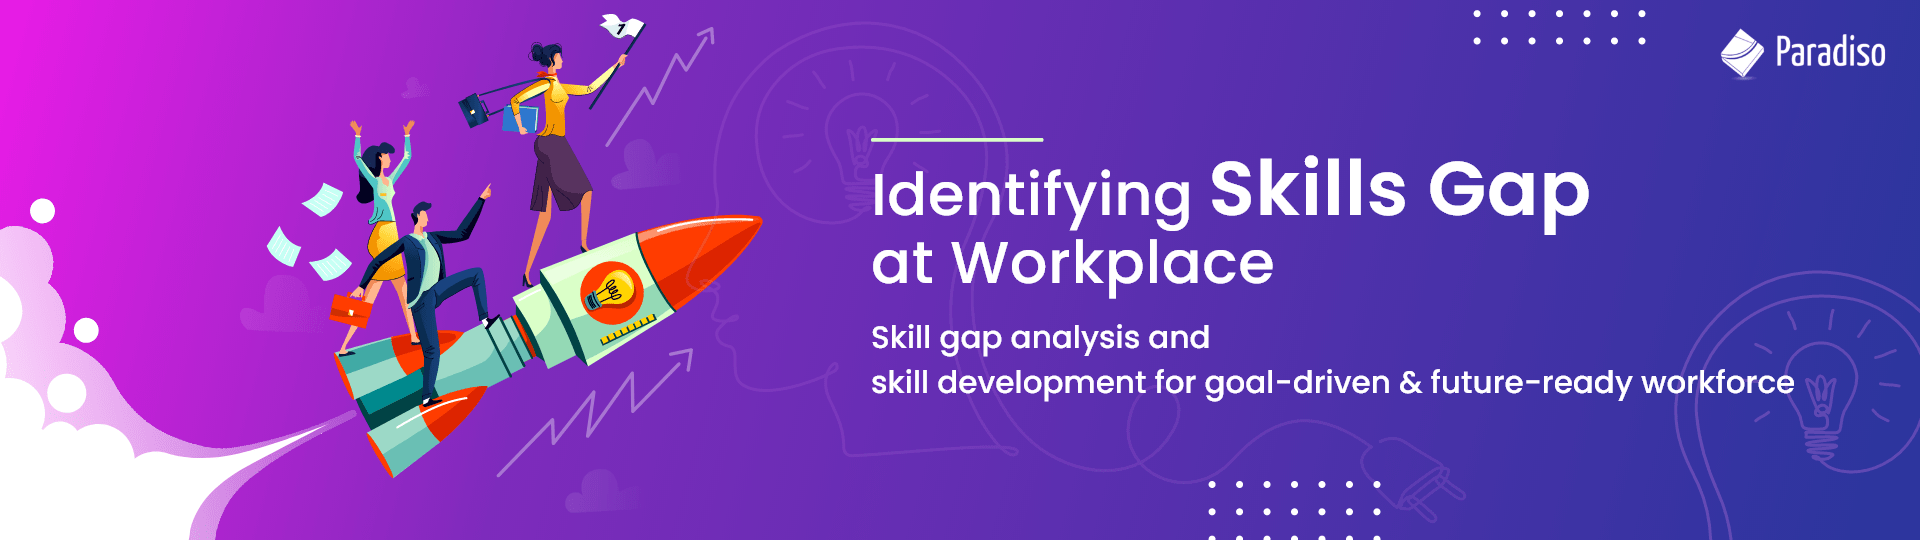 Identifying Skills Gap at Workplace